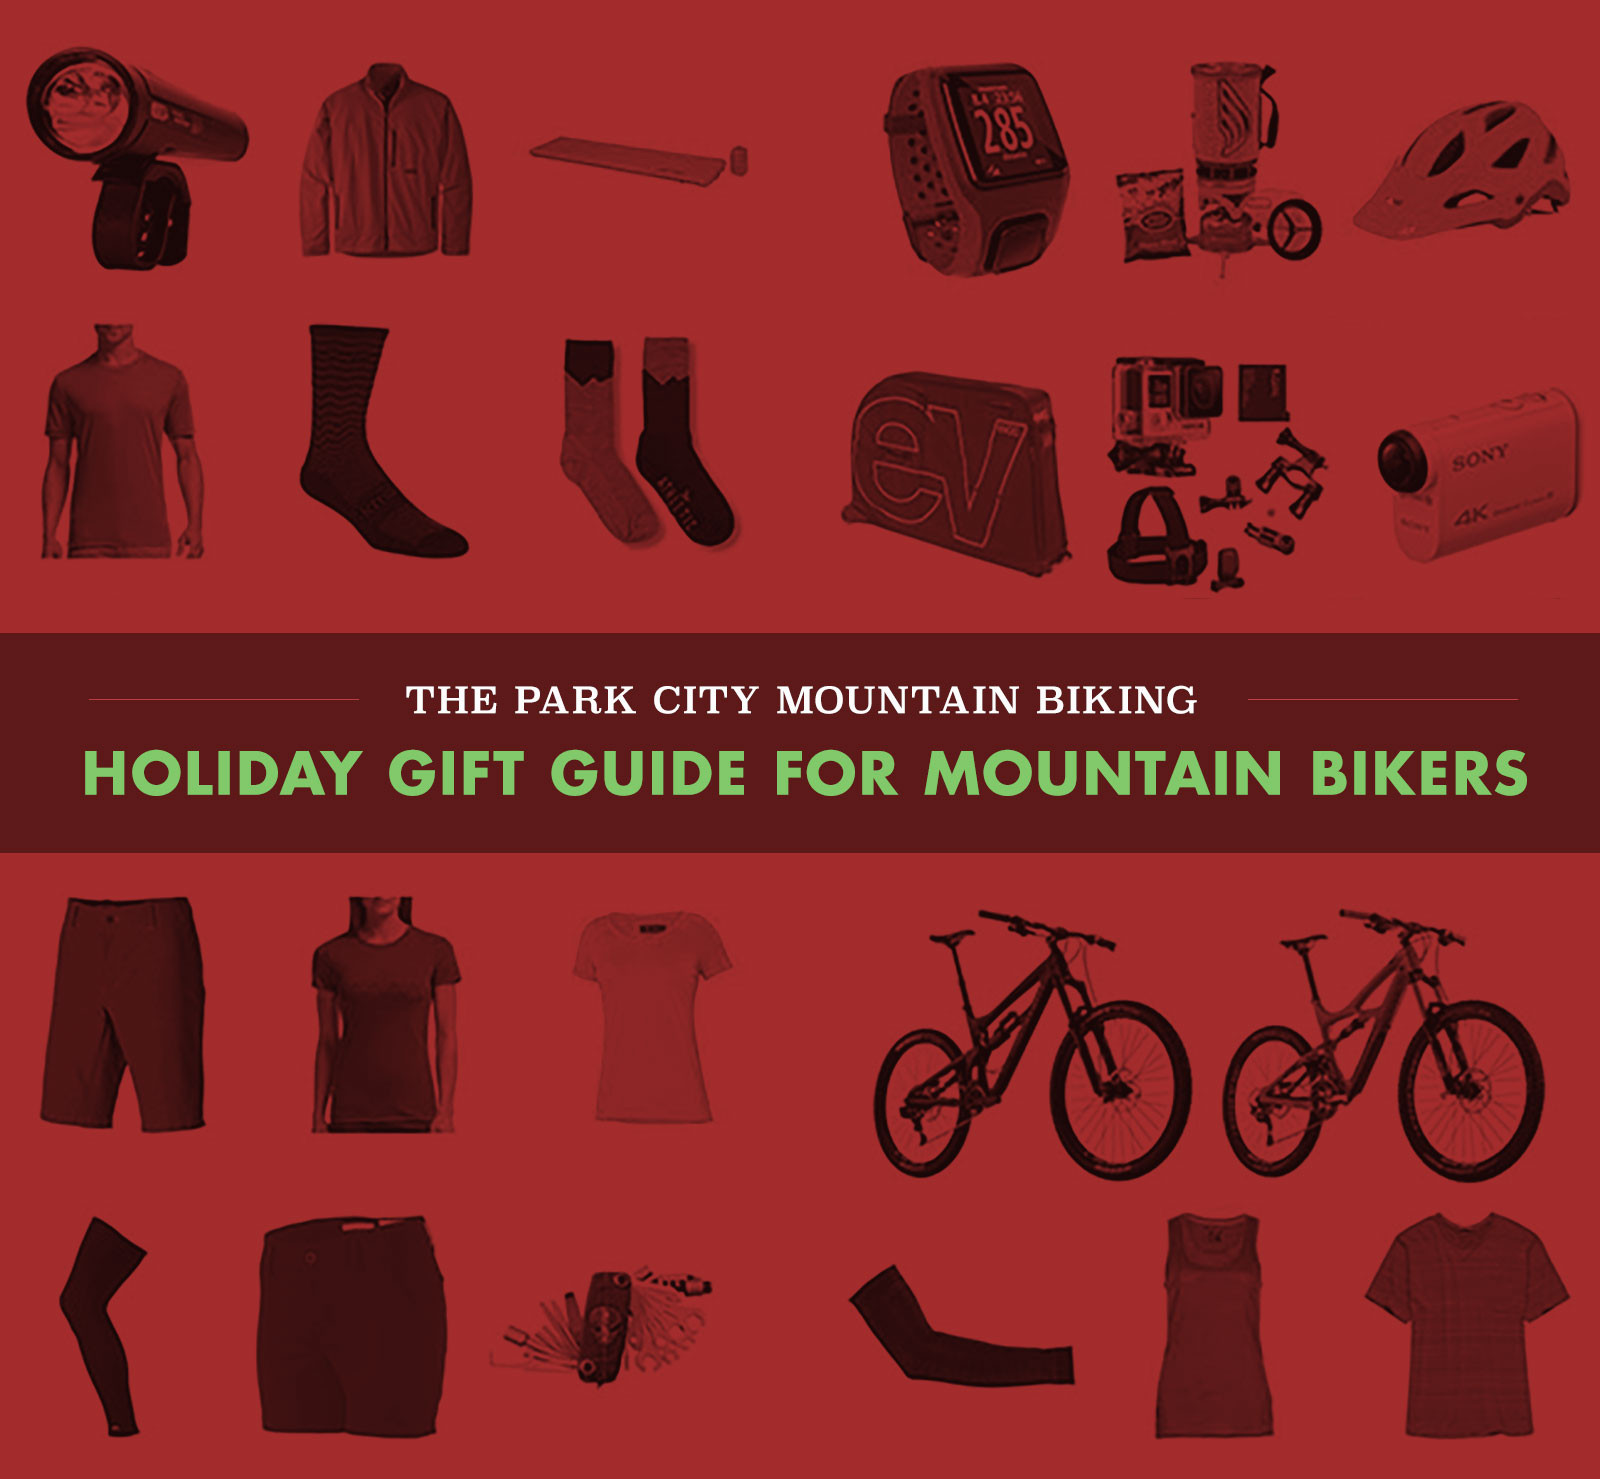 Best ideas about Gift Ideas For Mountain Bikers
. Save or Pin Gift Guide for Mountain Bikers Park City Mountain Biking Now.